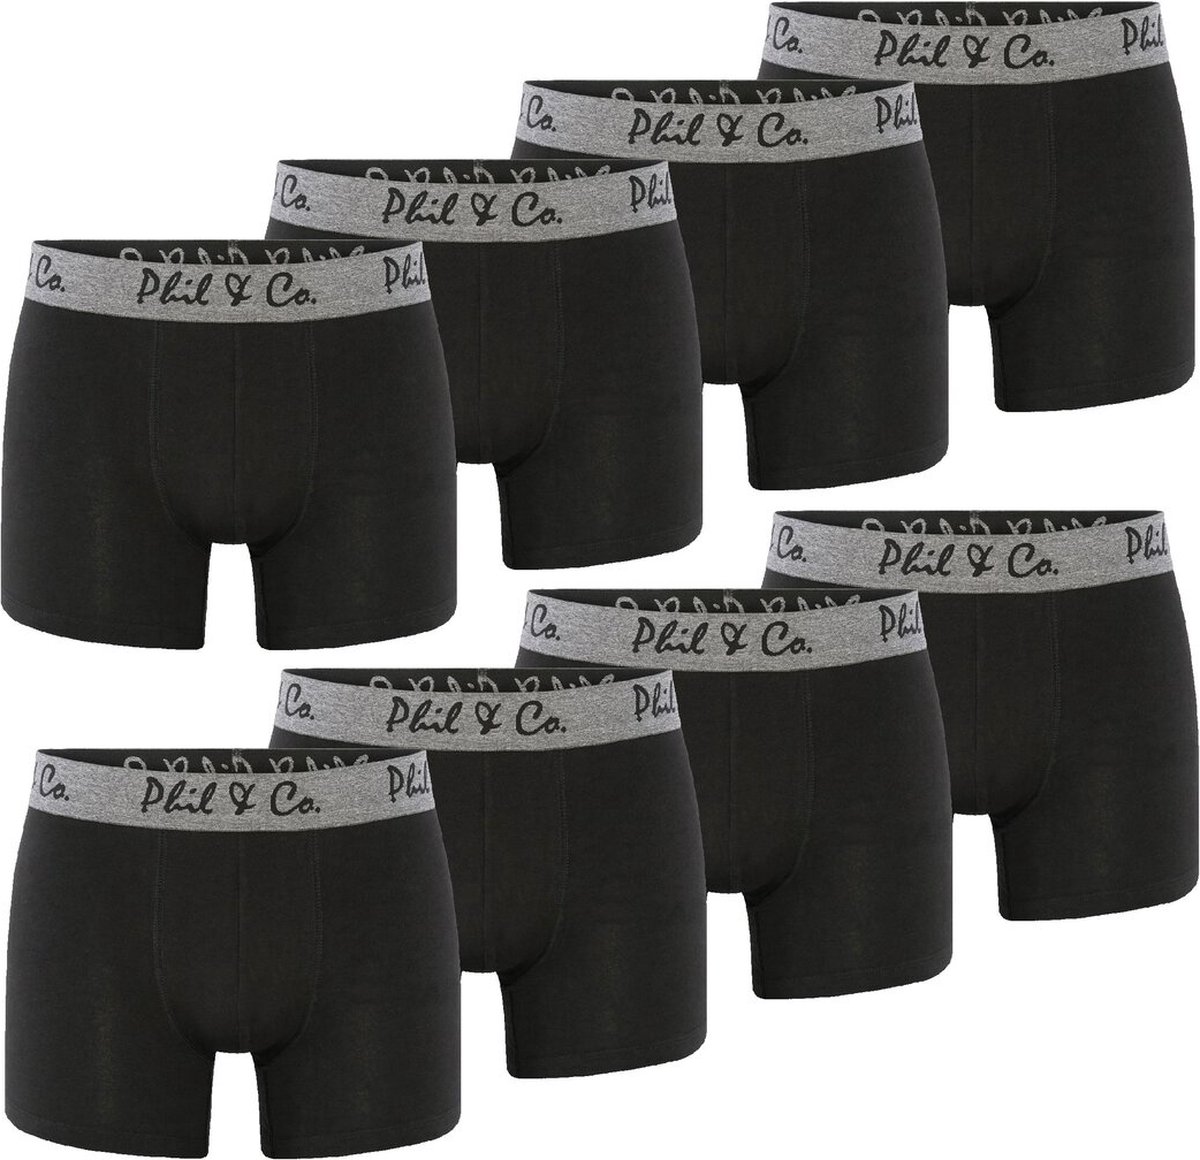 Phil & Co Zwarte Boxershorts Heren Multipack Zwart 8-Pack - Maat M | Onderbroek